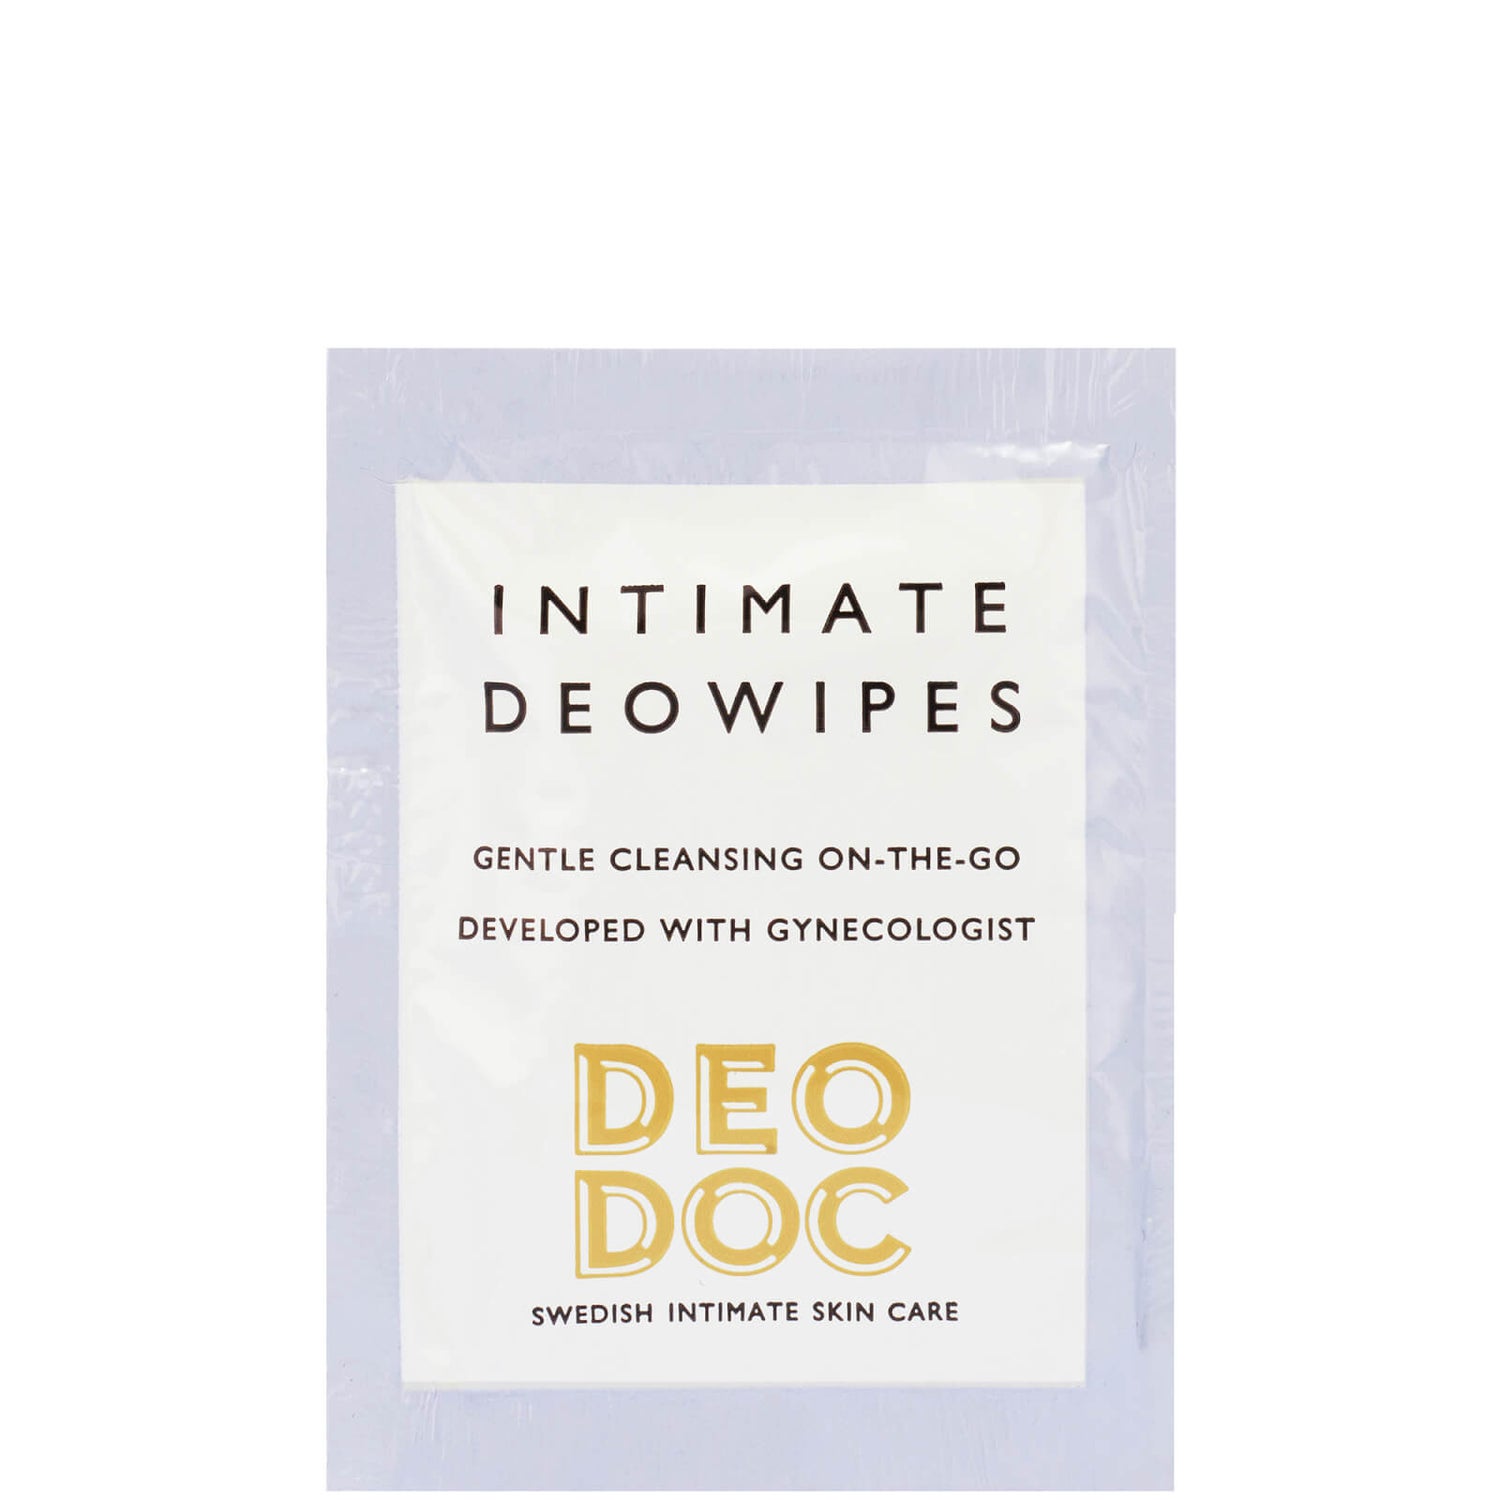 DeoDoc Intimate Deowipes